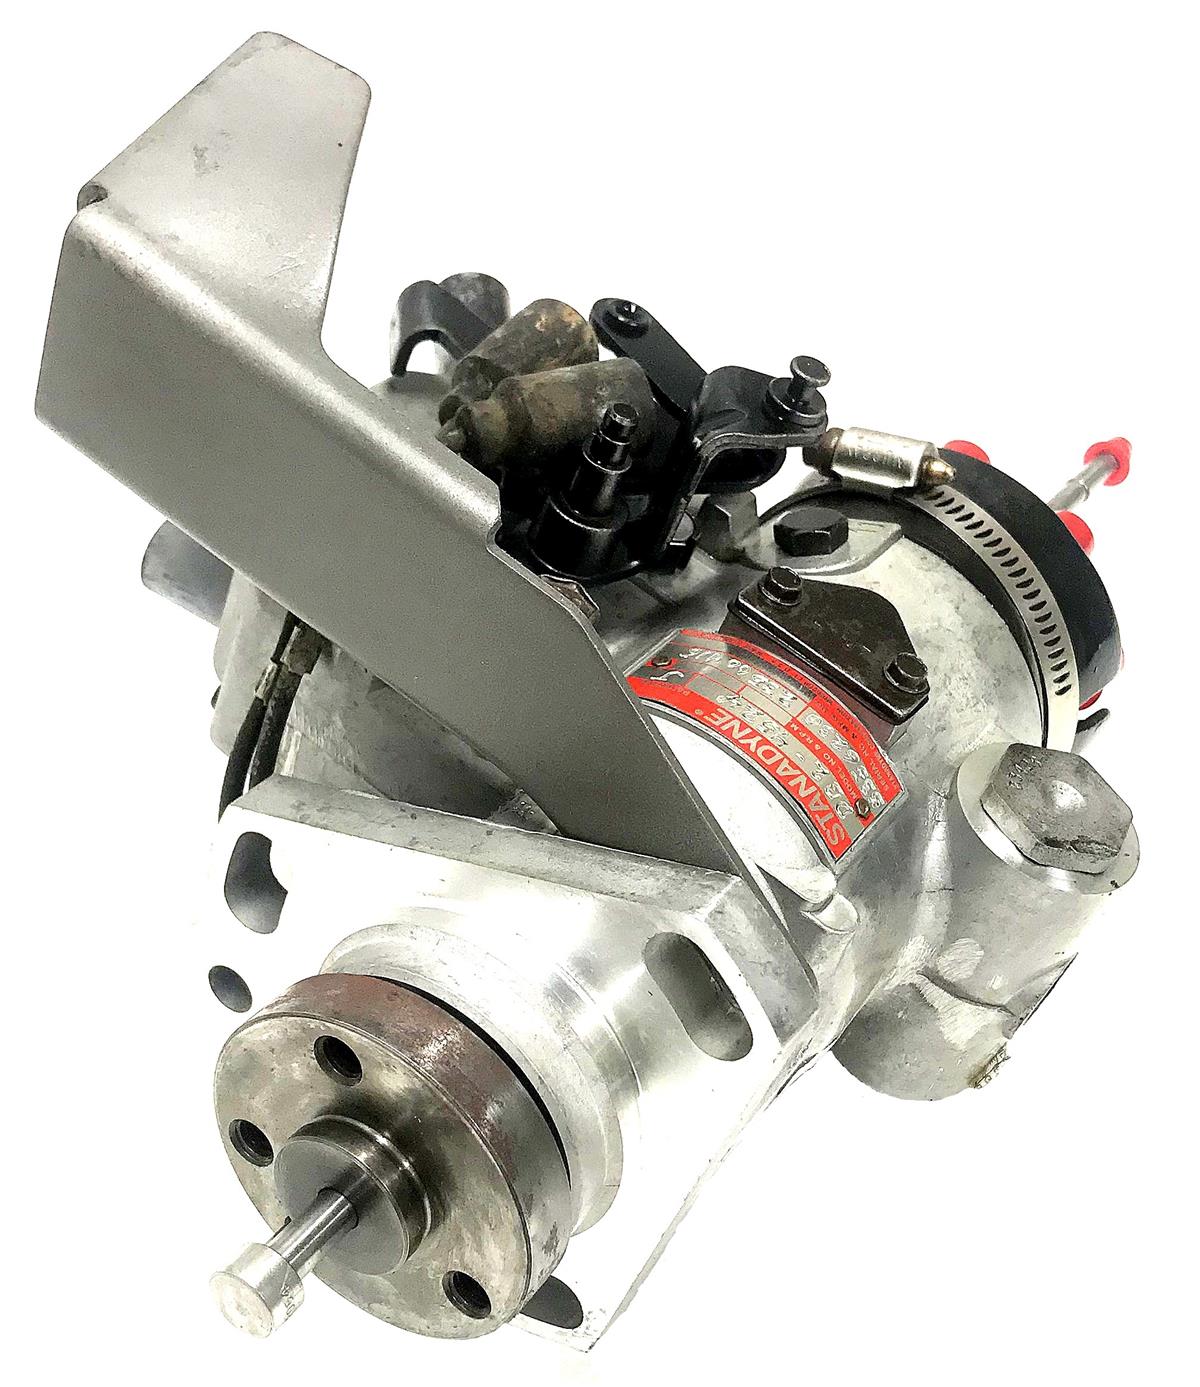 HM-1083 | HM-1083  6.5L Turbo Diesel Fuel Injection Pump With Throttle Position Sensor HMMWV (7).jpeg